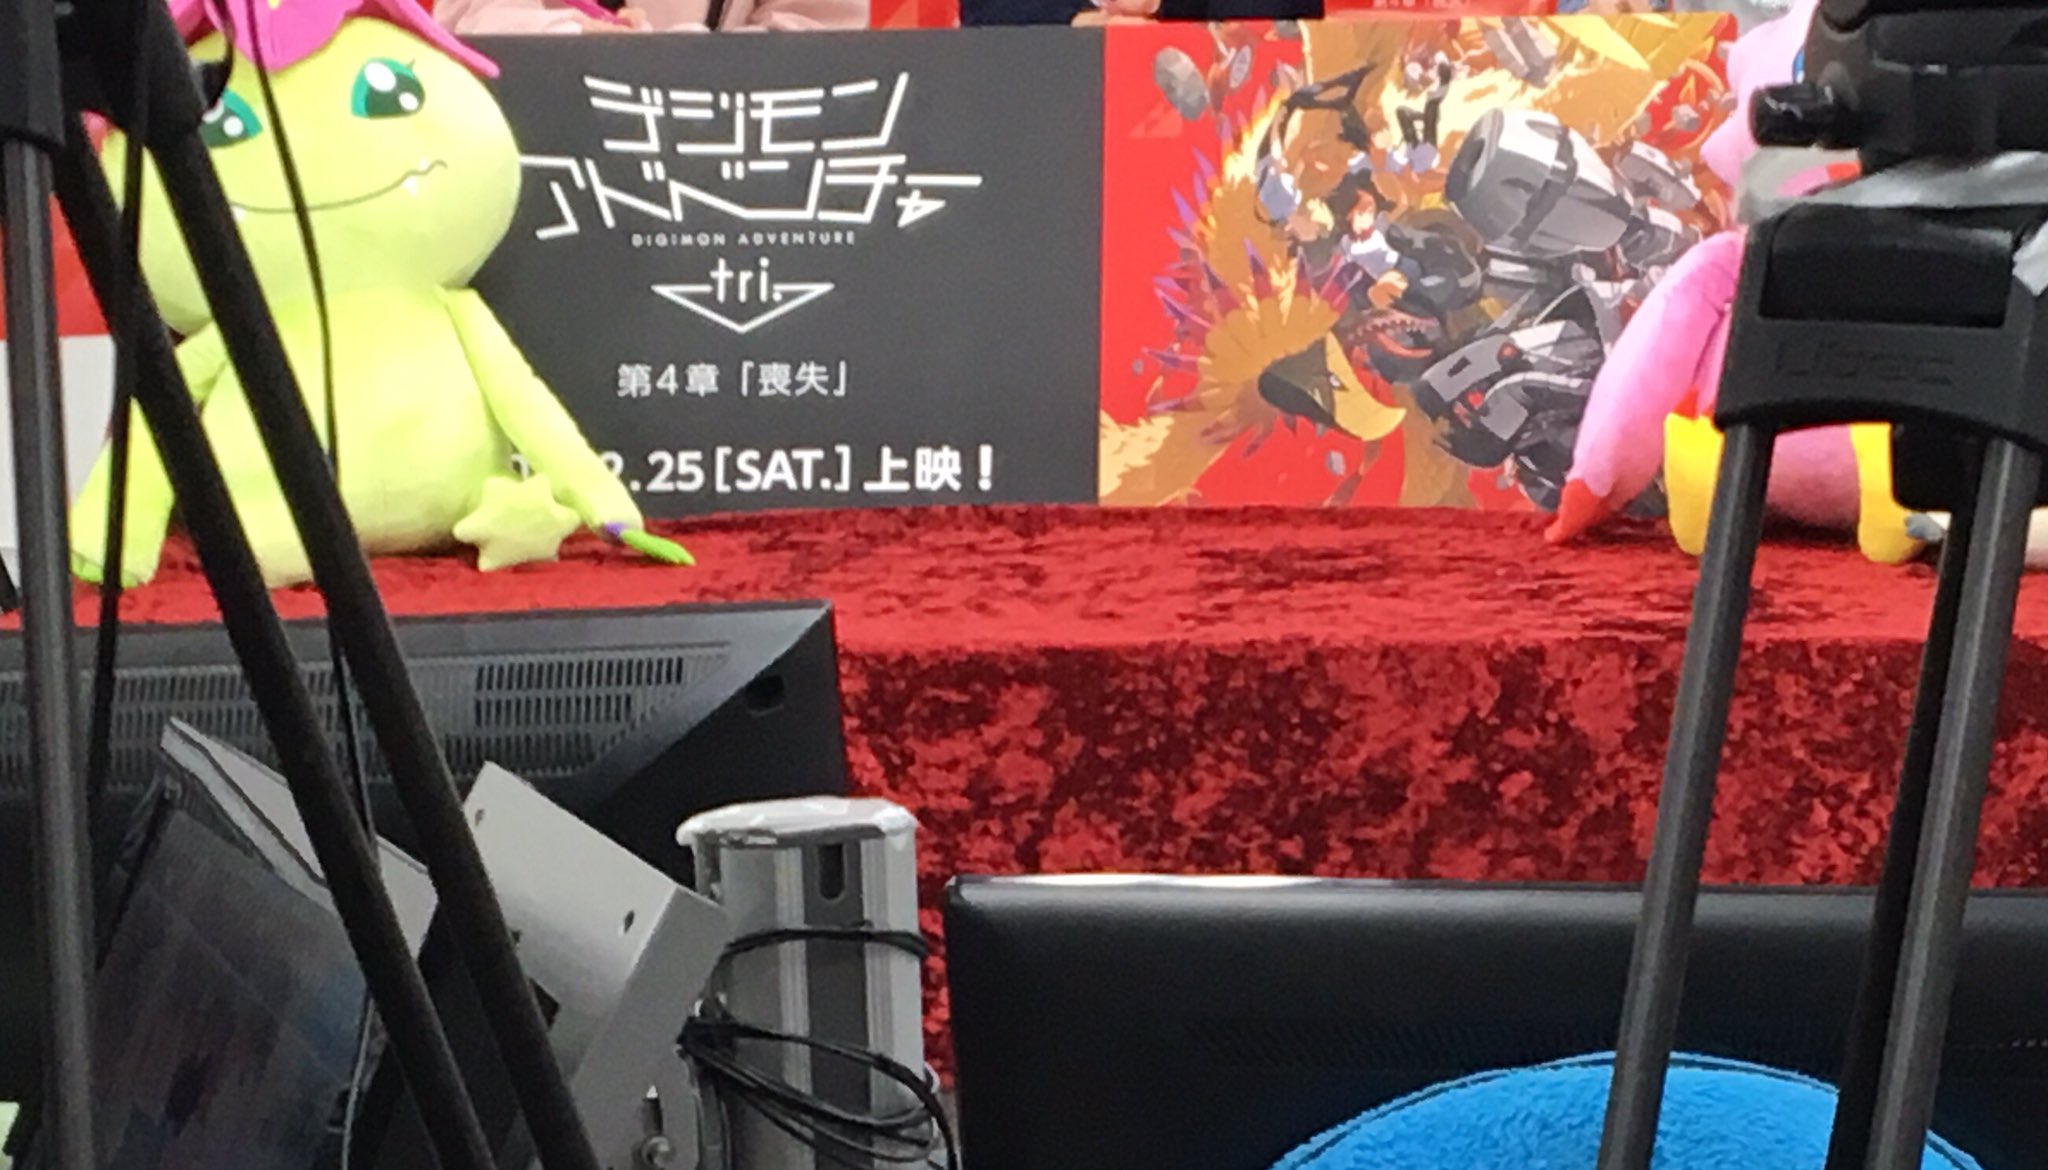 tri. Returns to King of System Karaoke Shops for Digimon Adventure tri.  Part 5